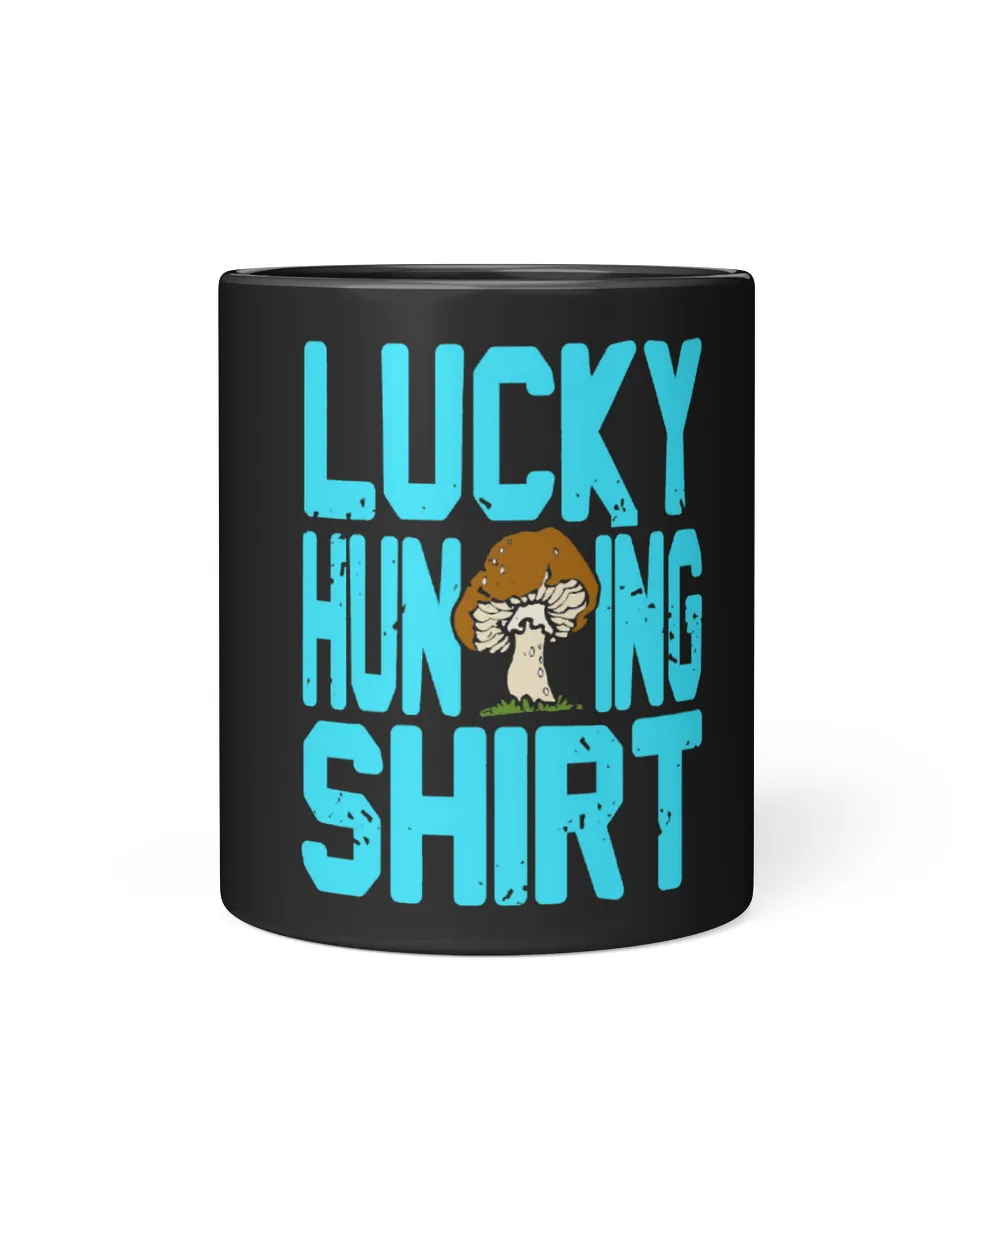 Lucky Hunting Shirt Cool Retro Mushroom Hunting Present